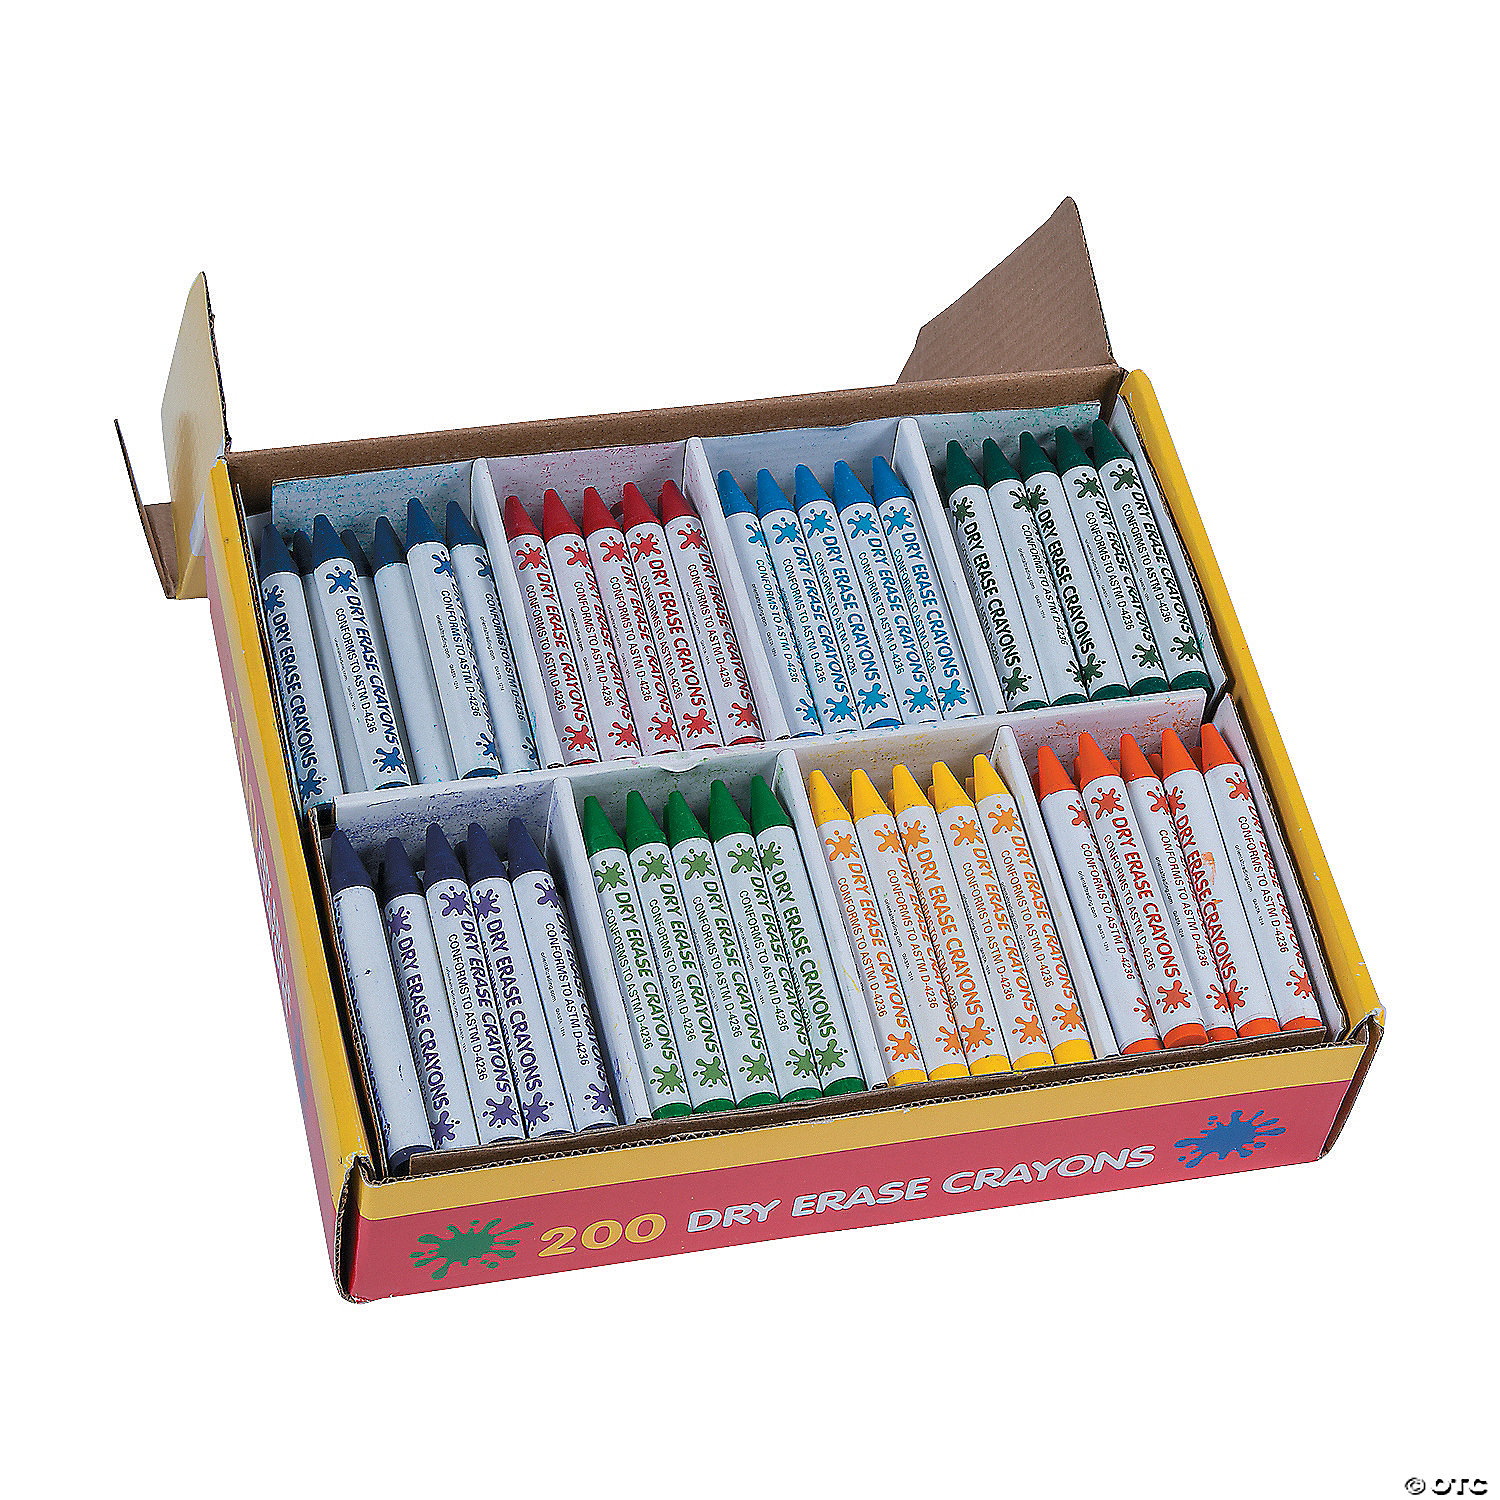 Crayola - Classpack Crayons w/Markers 8 Colors